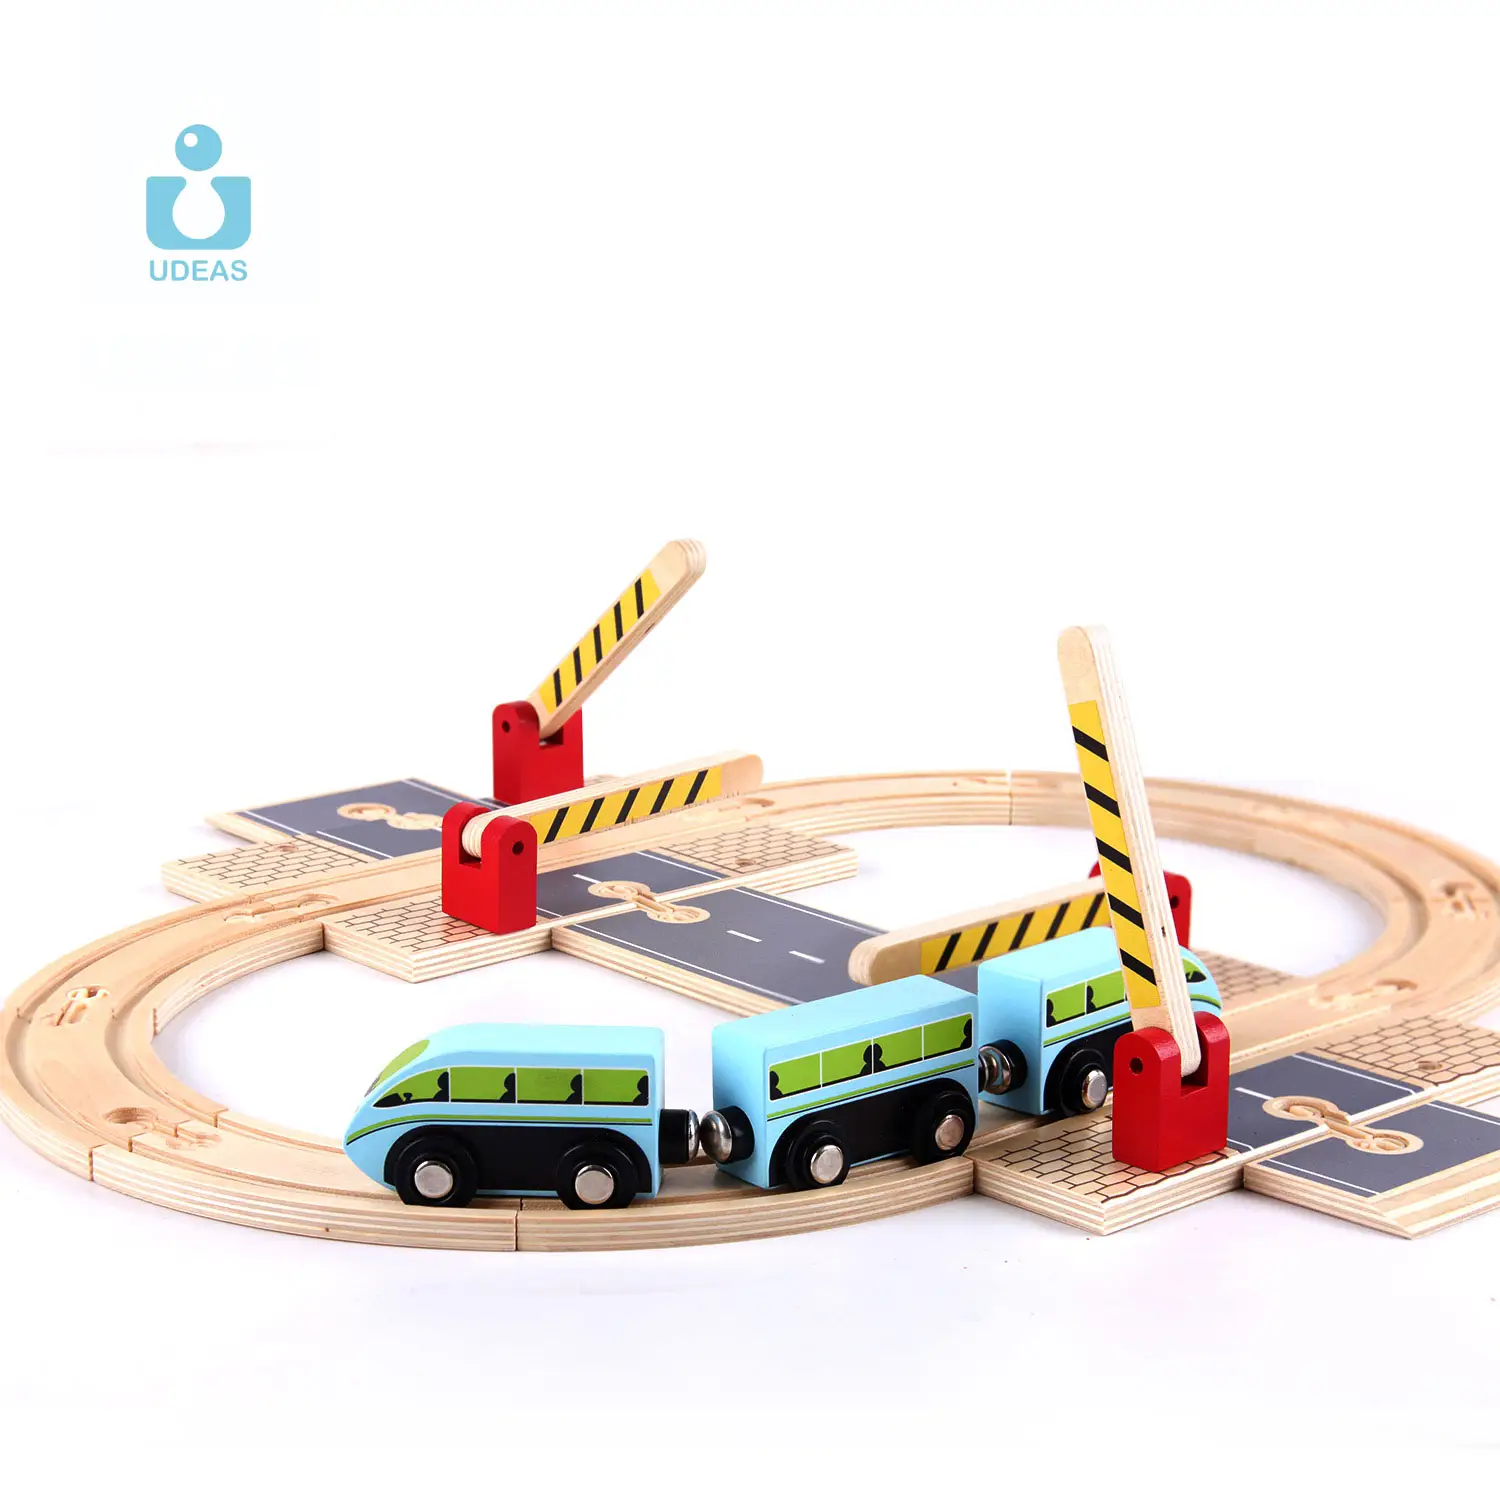 UDEAS למידה חינוכית Diy Creative רכבת צעצועי כביש רכב מסלולי עץ רכבת מסלול סט